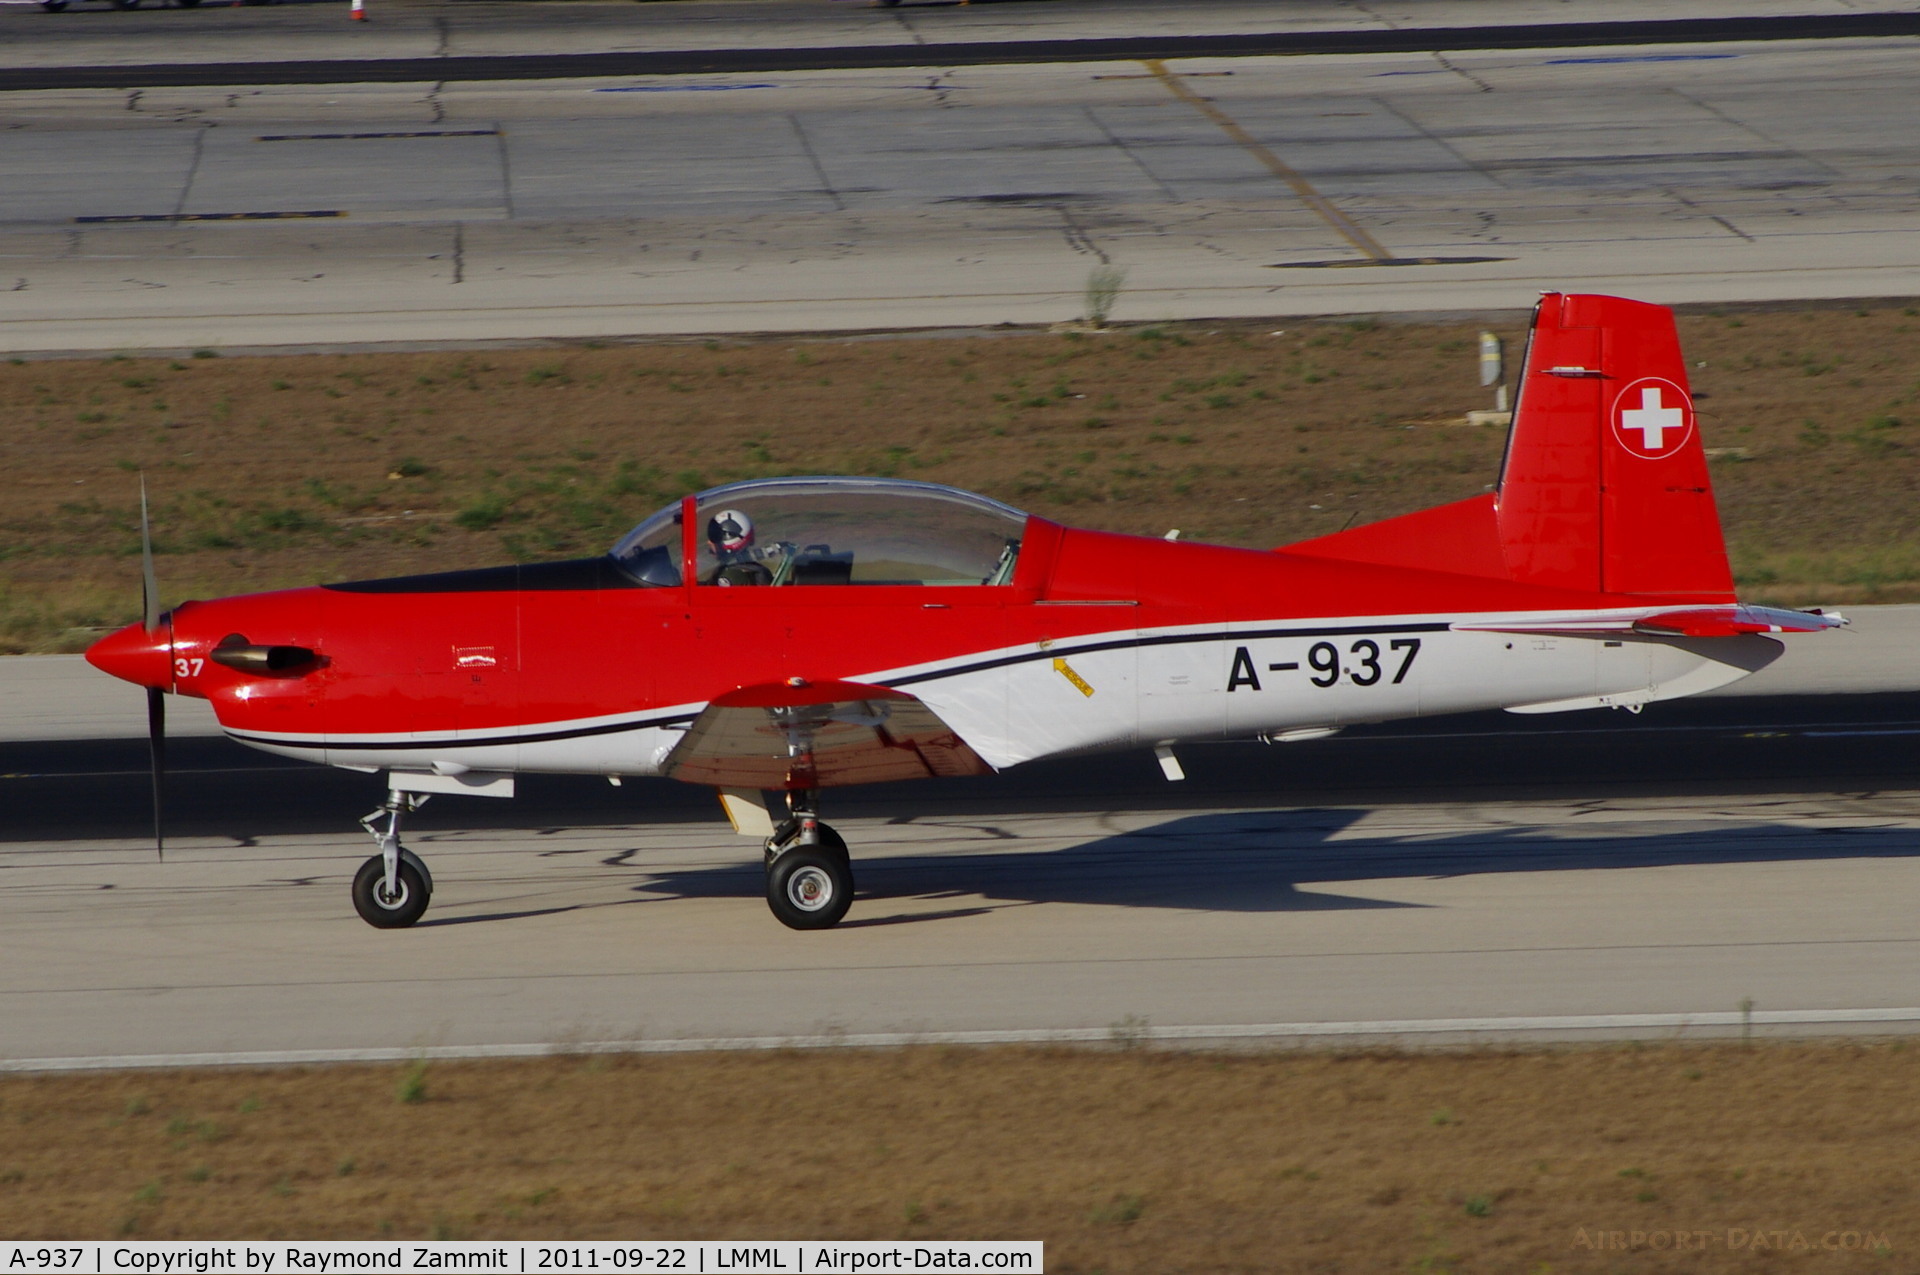 A-937, 1983 Pilatus PC-7 Turbo Trainer C/N 345, Pilatus PC-7 Turbo Trainer A-937 Swiss Air Force